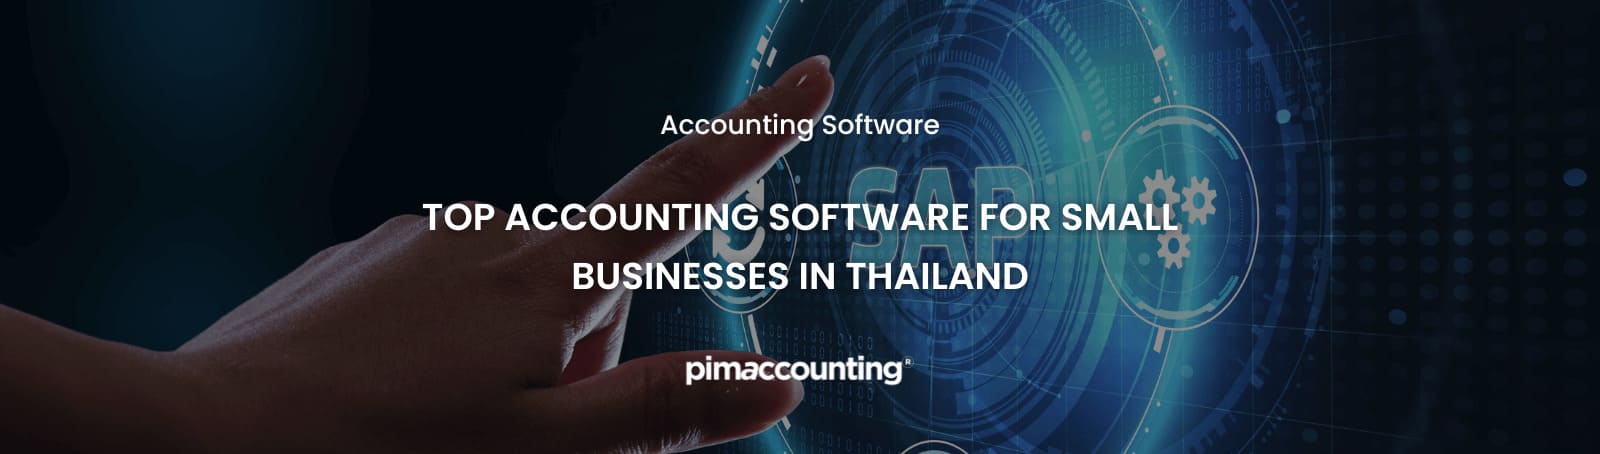 Top Accounting Software - Pimaccounting